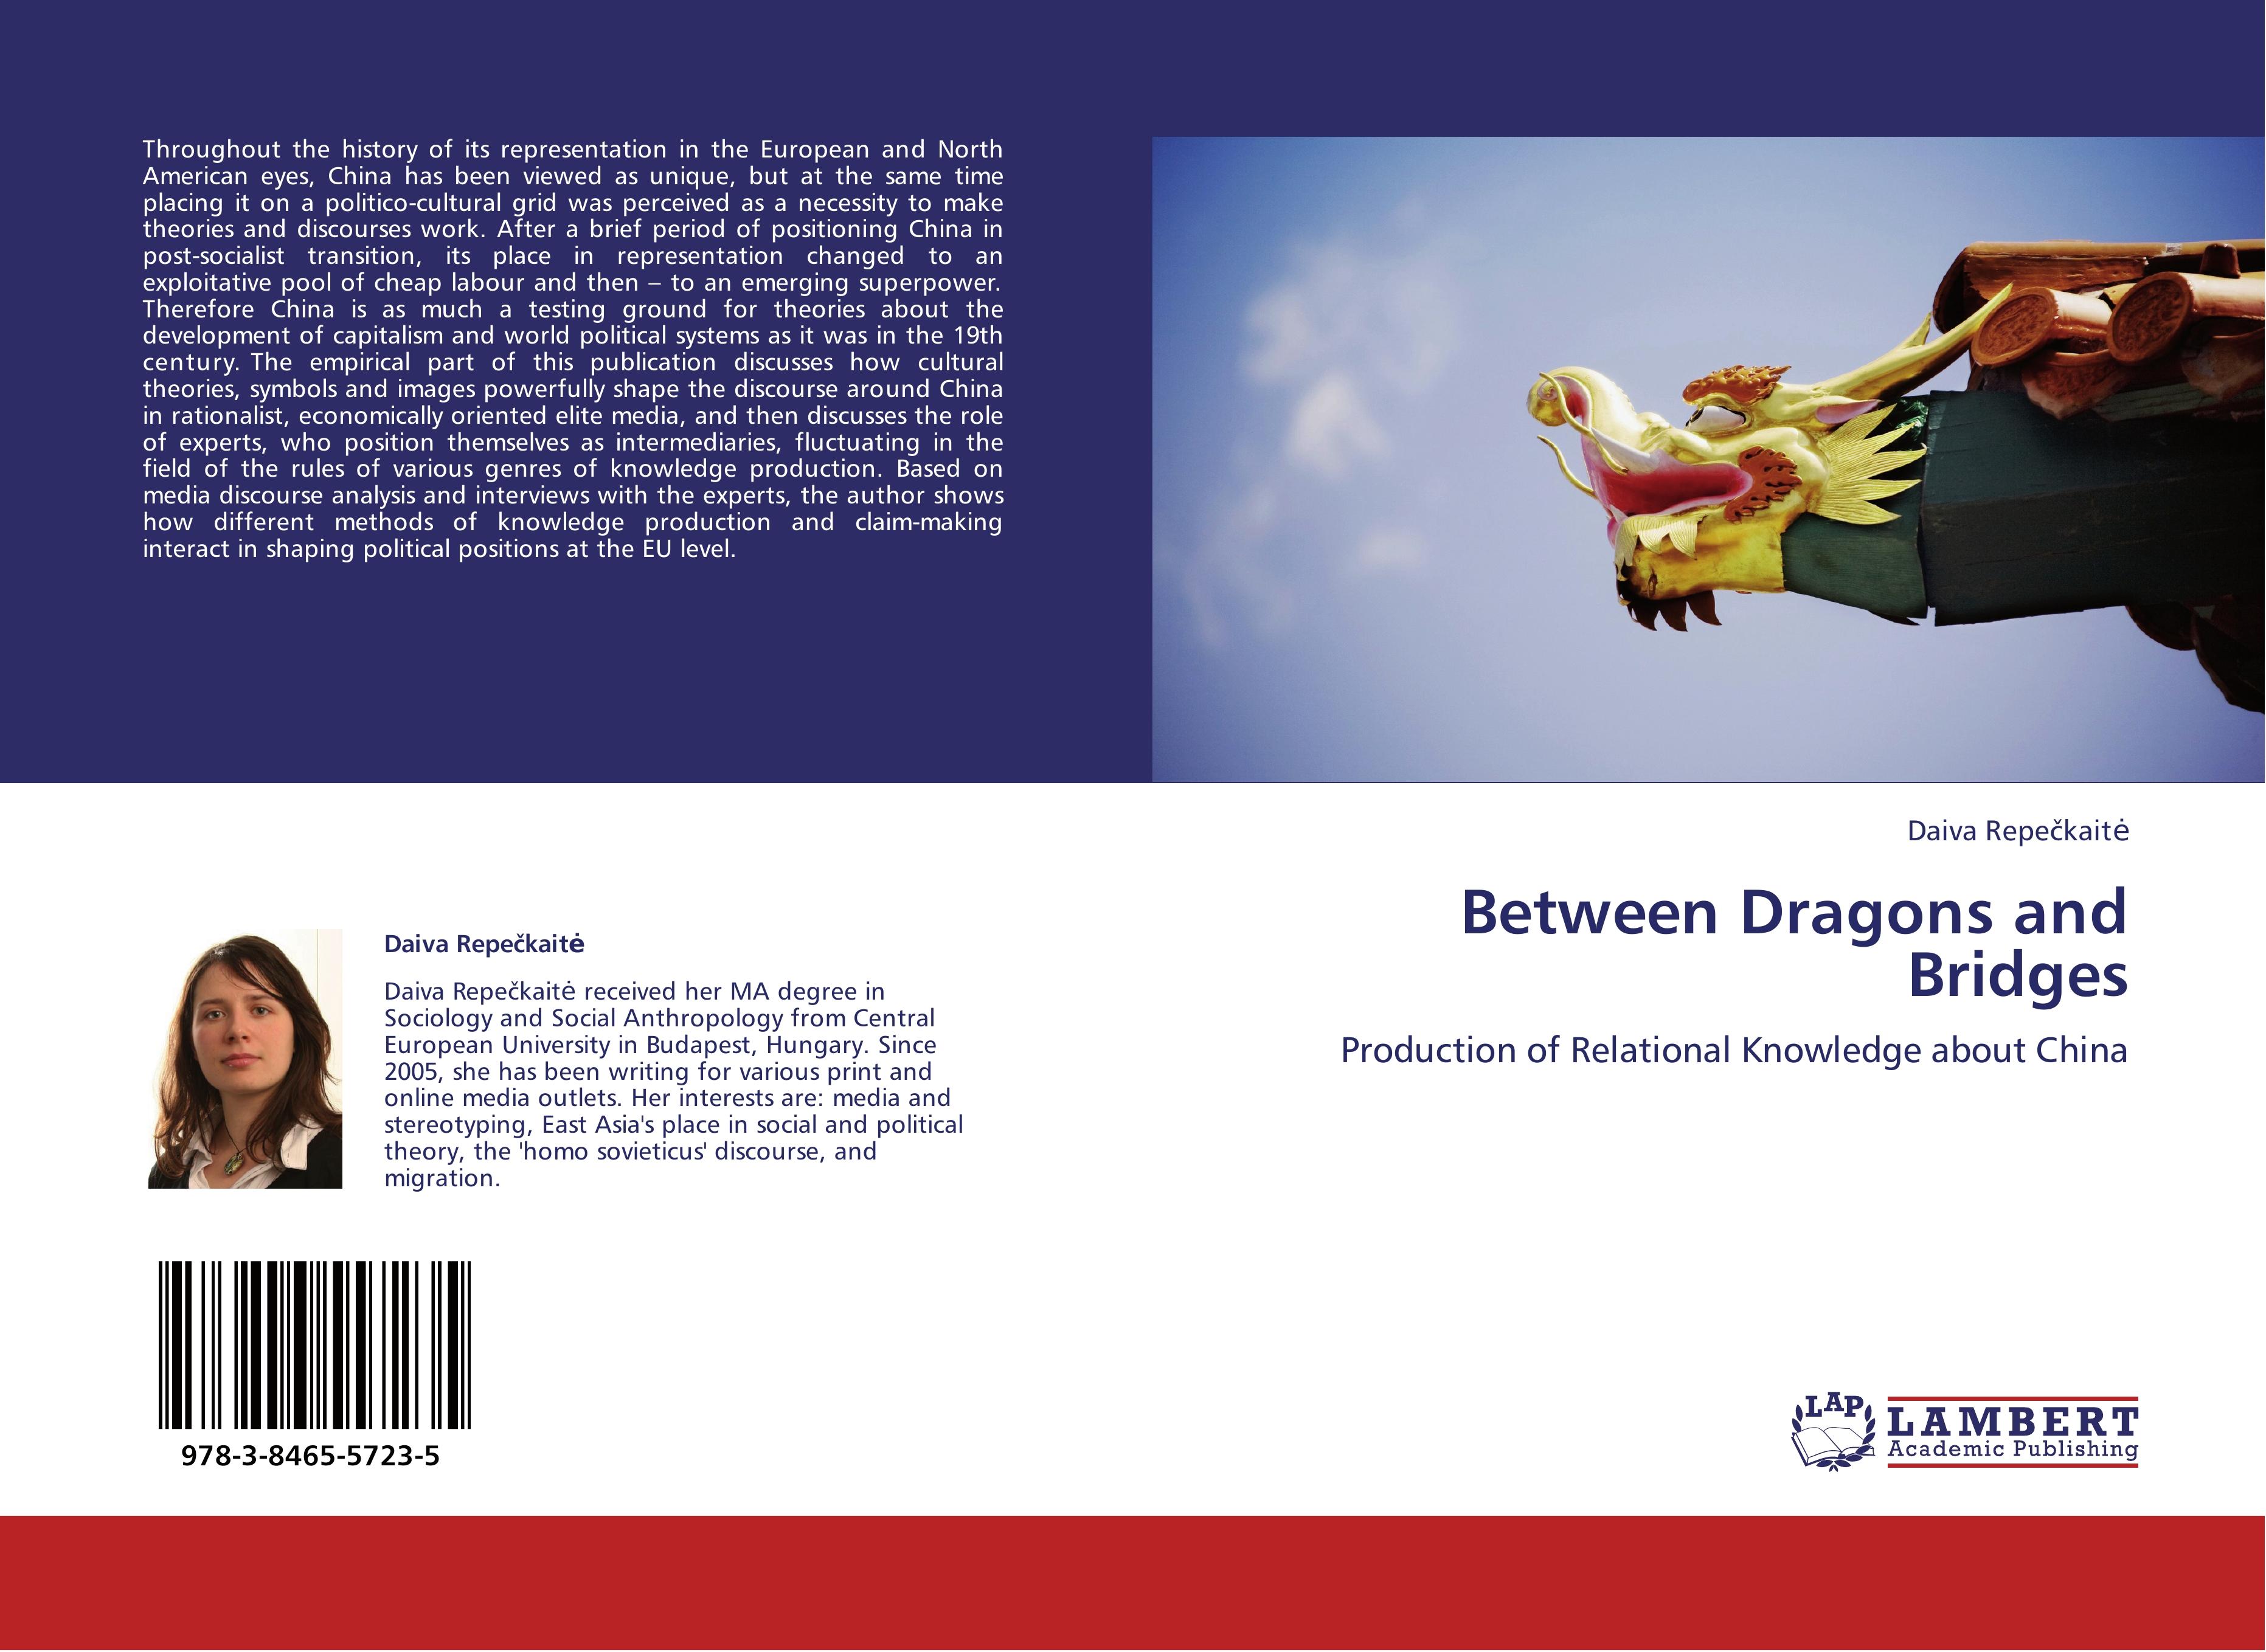 Between Dragons and Bridges - Daiva Repeckaite